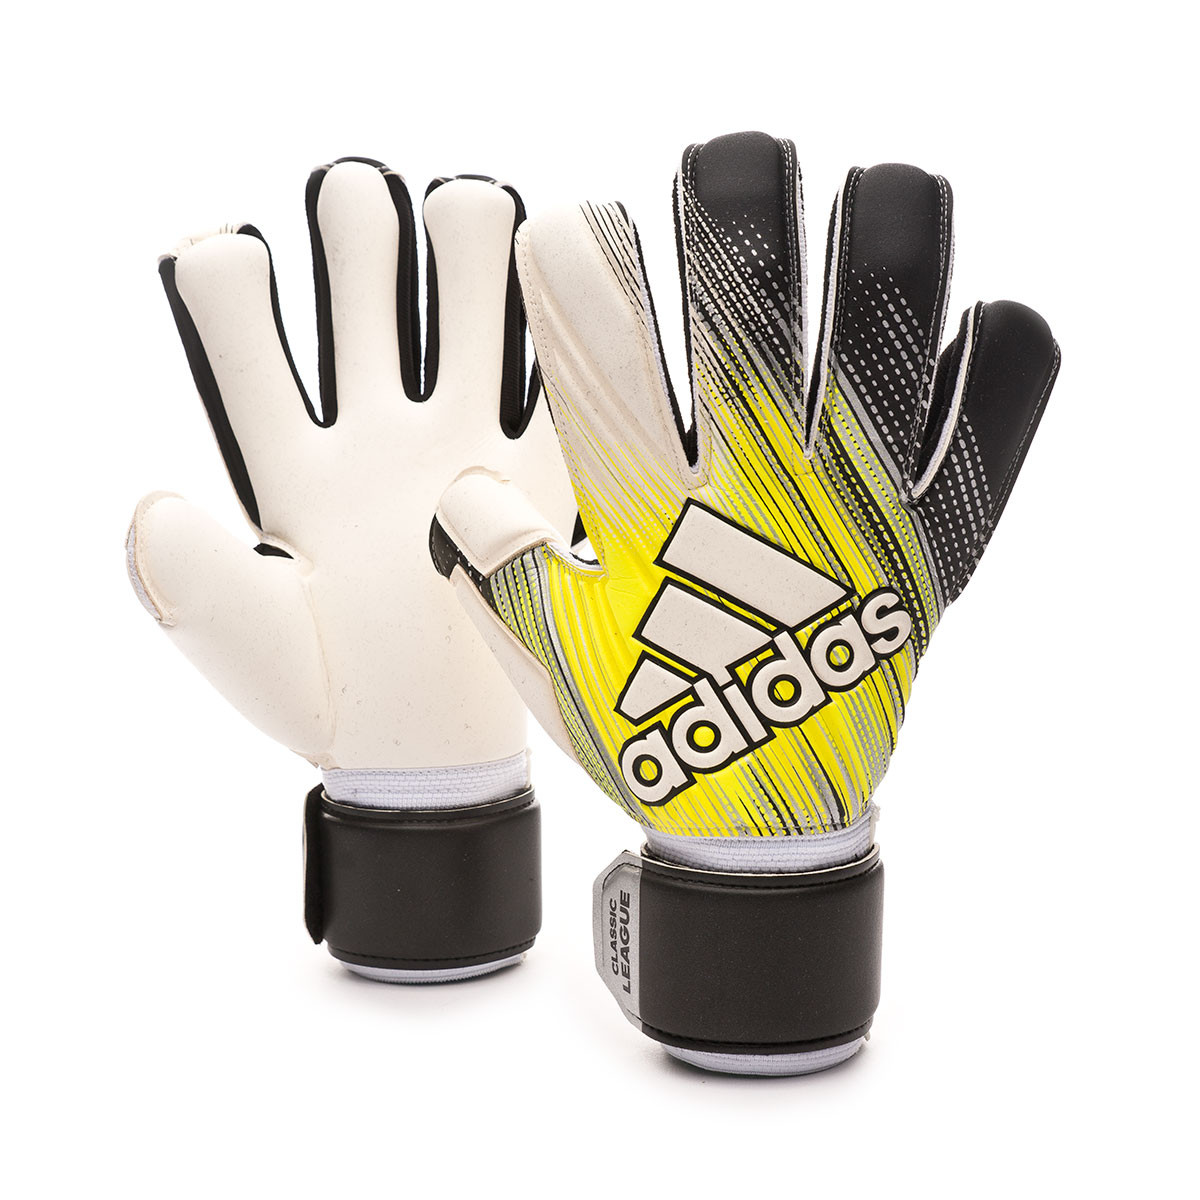 adidas classic league gloves